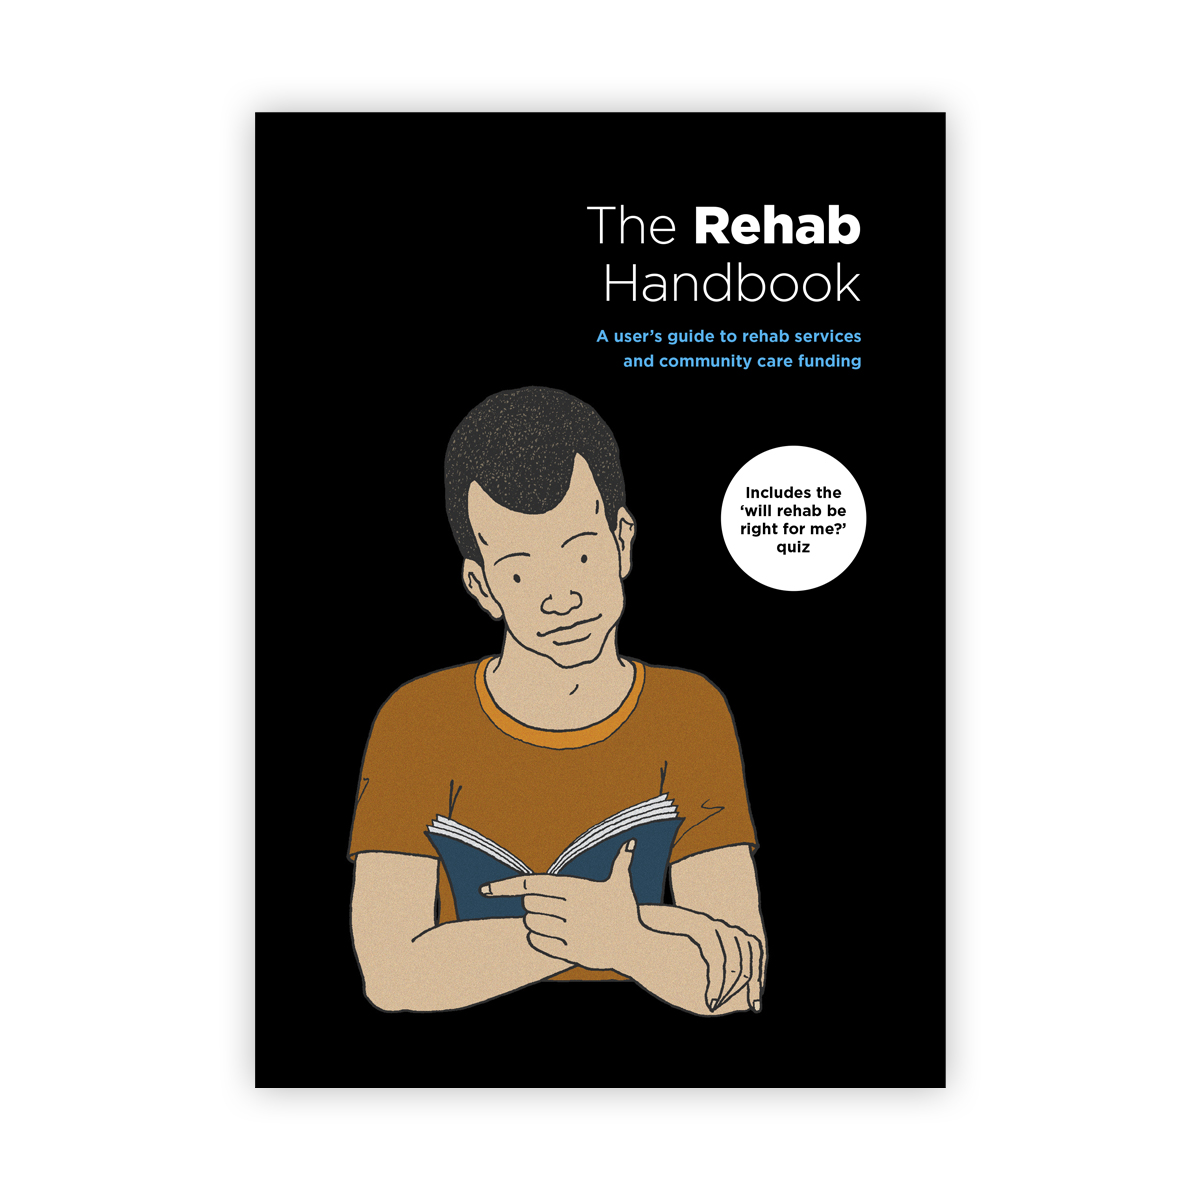 The Rehab Handbook